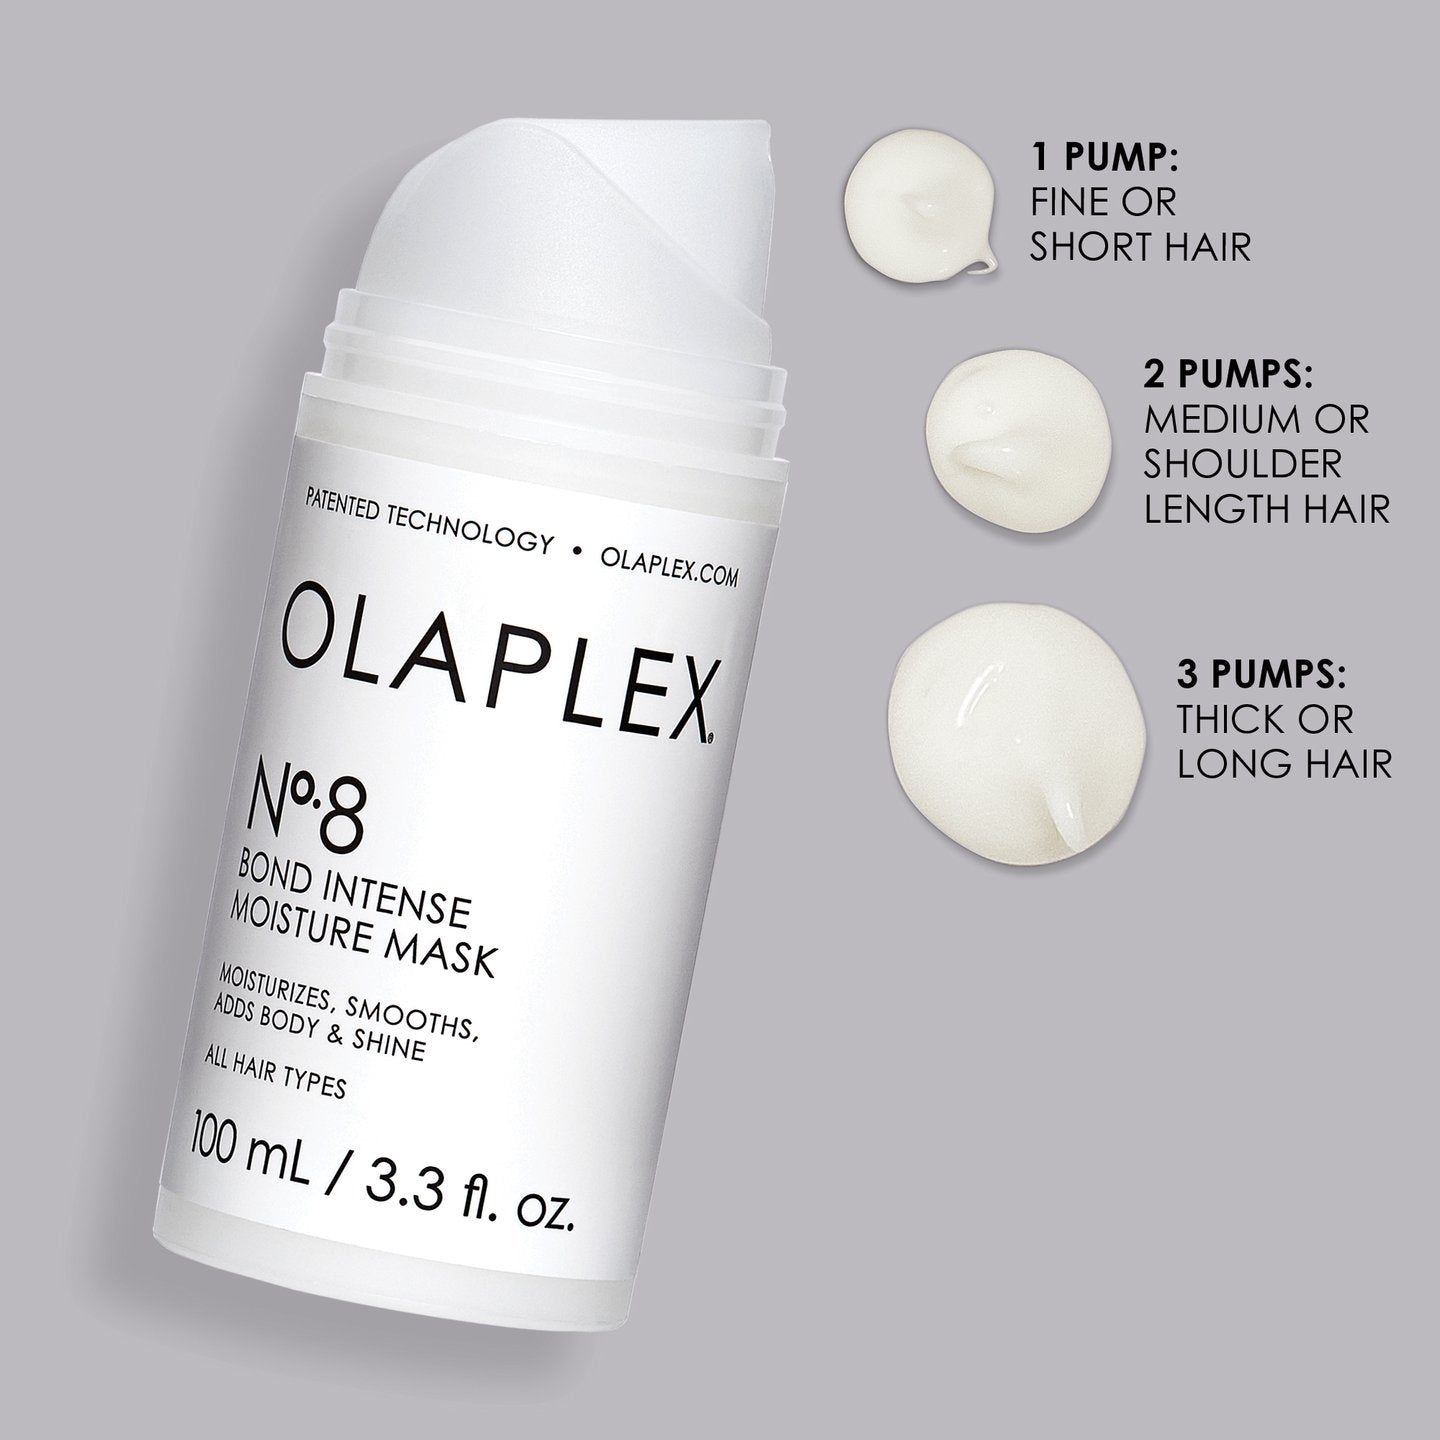 Olaplex - Nº.8 - Bond Intense Moisture Mask |3.3 oz| - ProCare Outlet by Olaplex